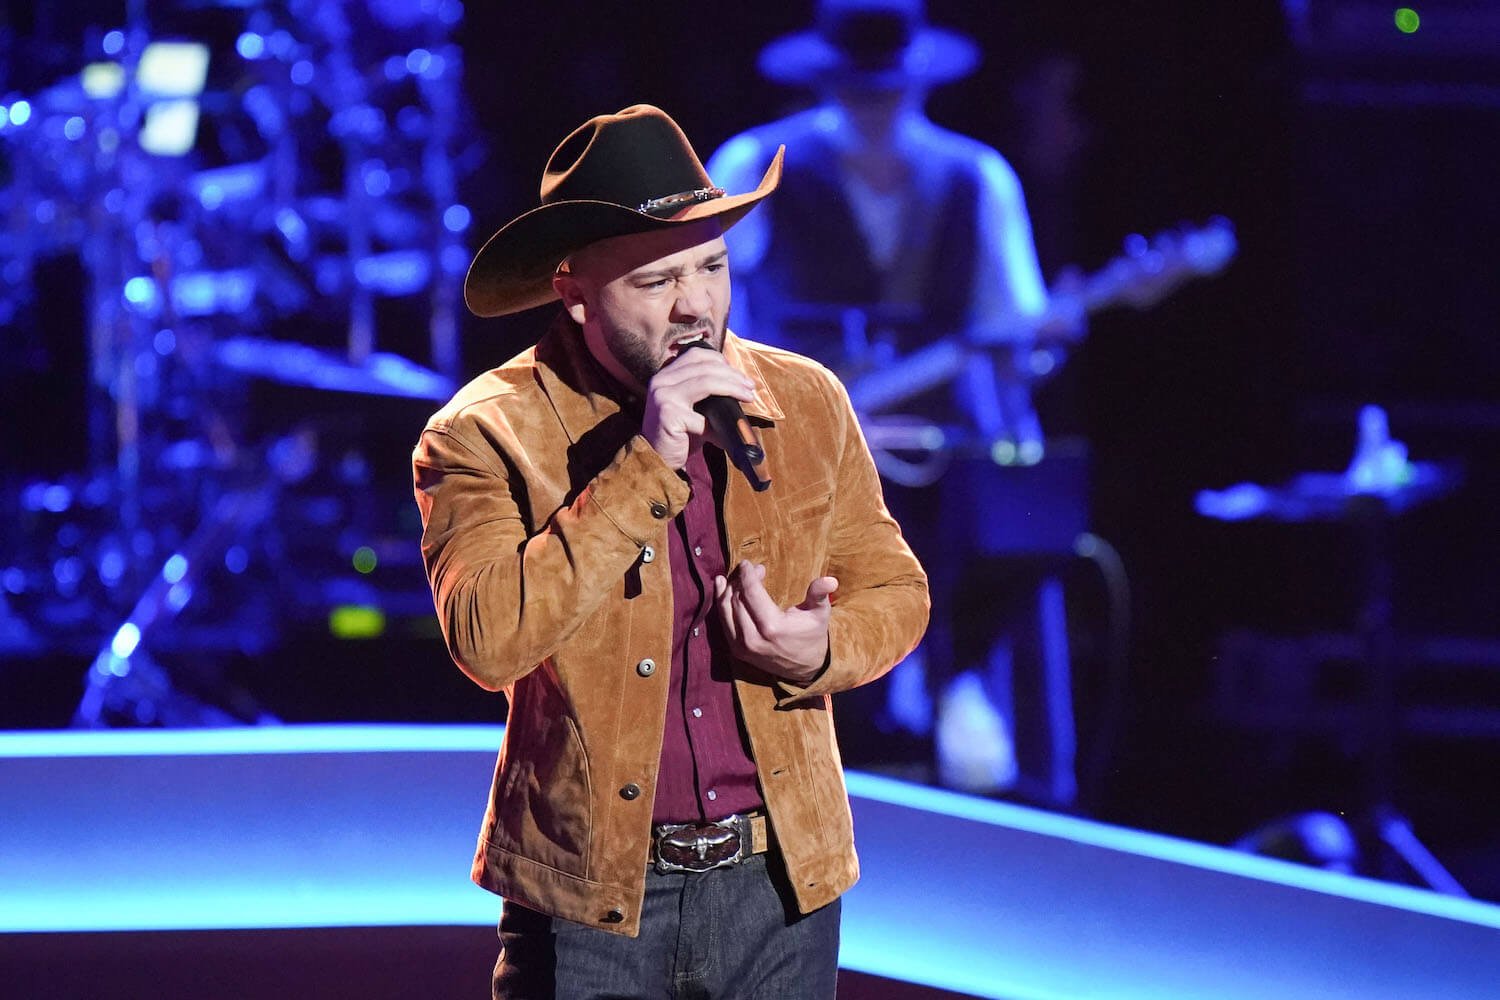 'The Voice' Season 24 contestant Tom Nitti singing on stage